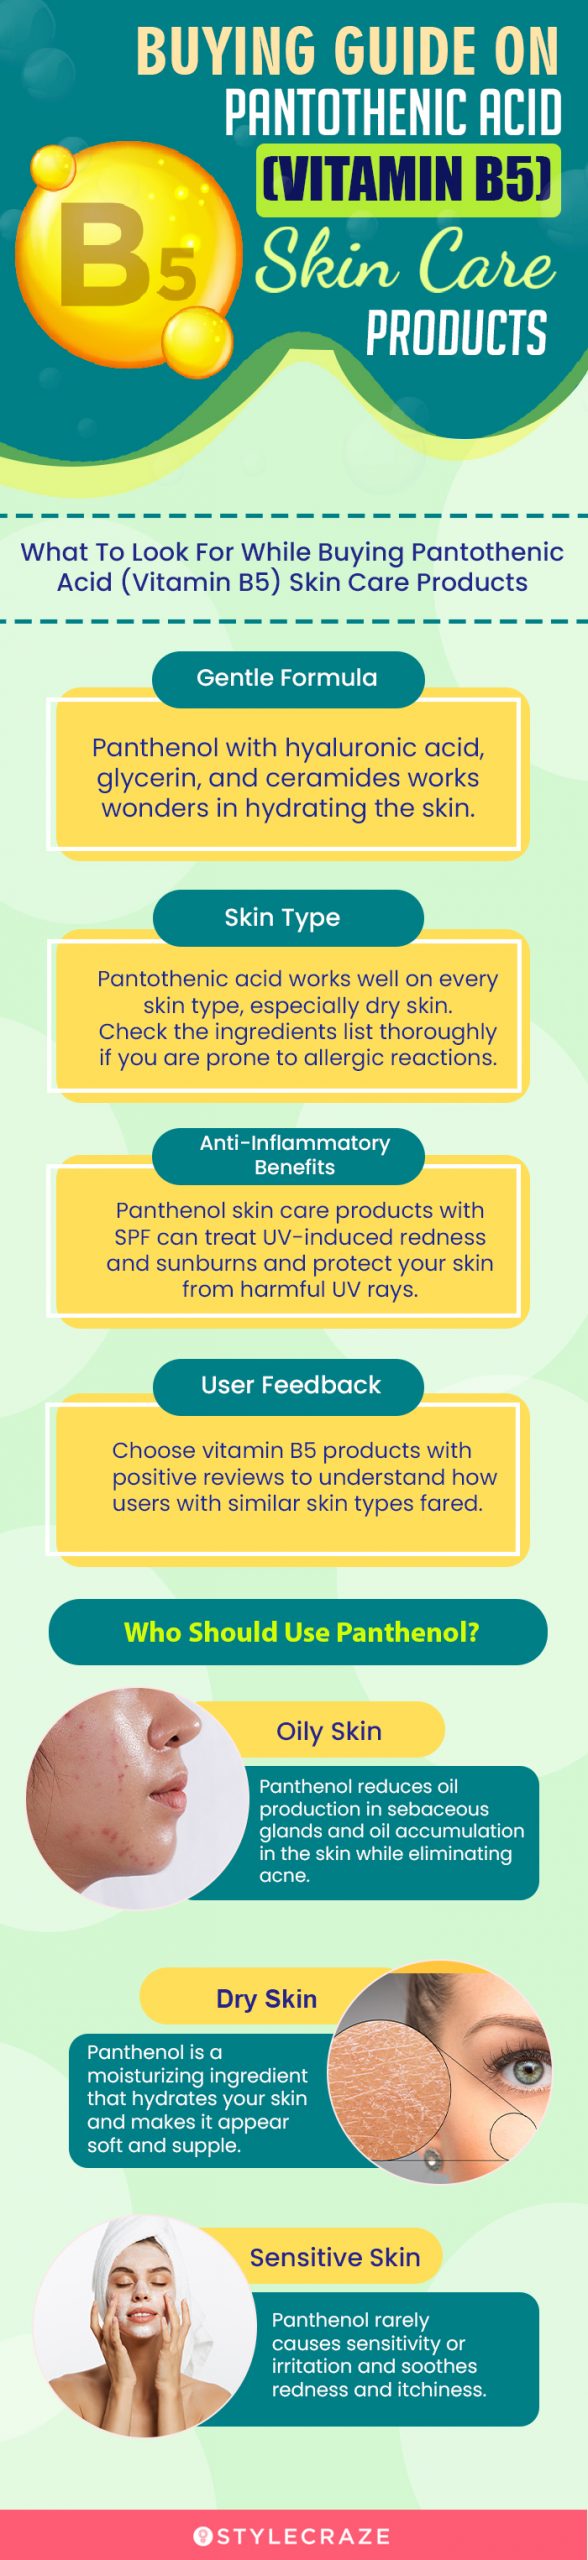 Buying Guide On Pantothenic Acid (Vitamin B5) Skin(infographic)